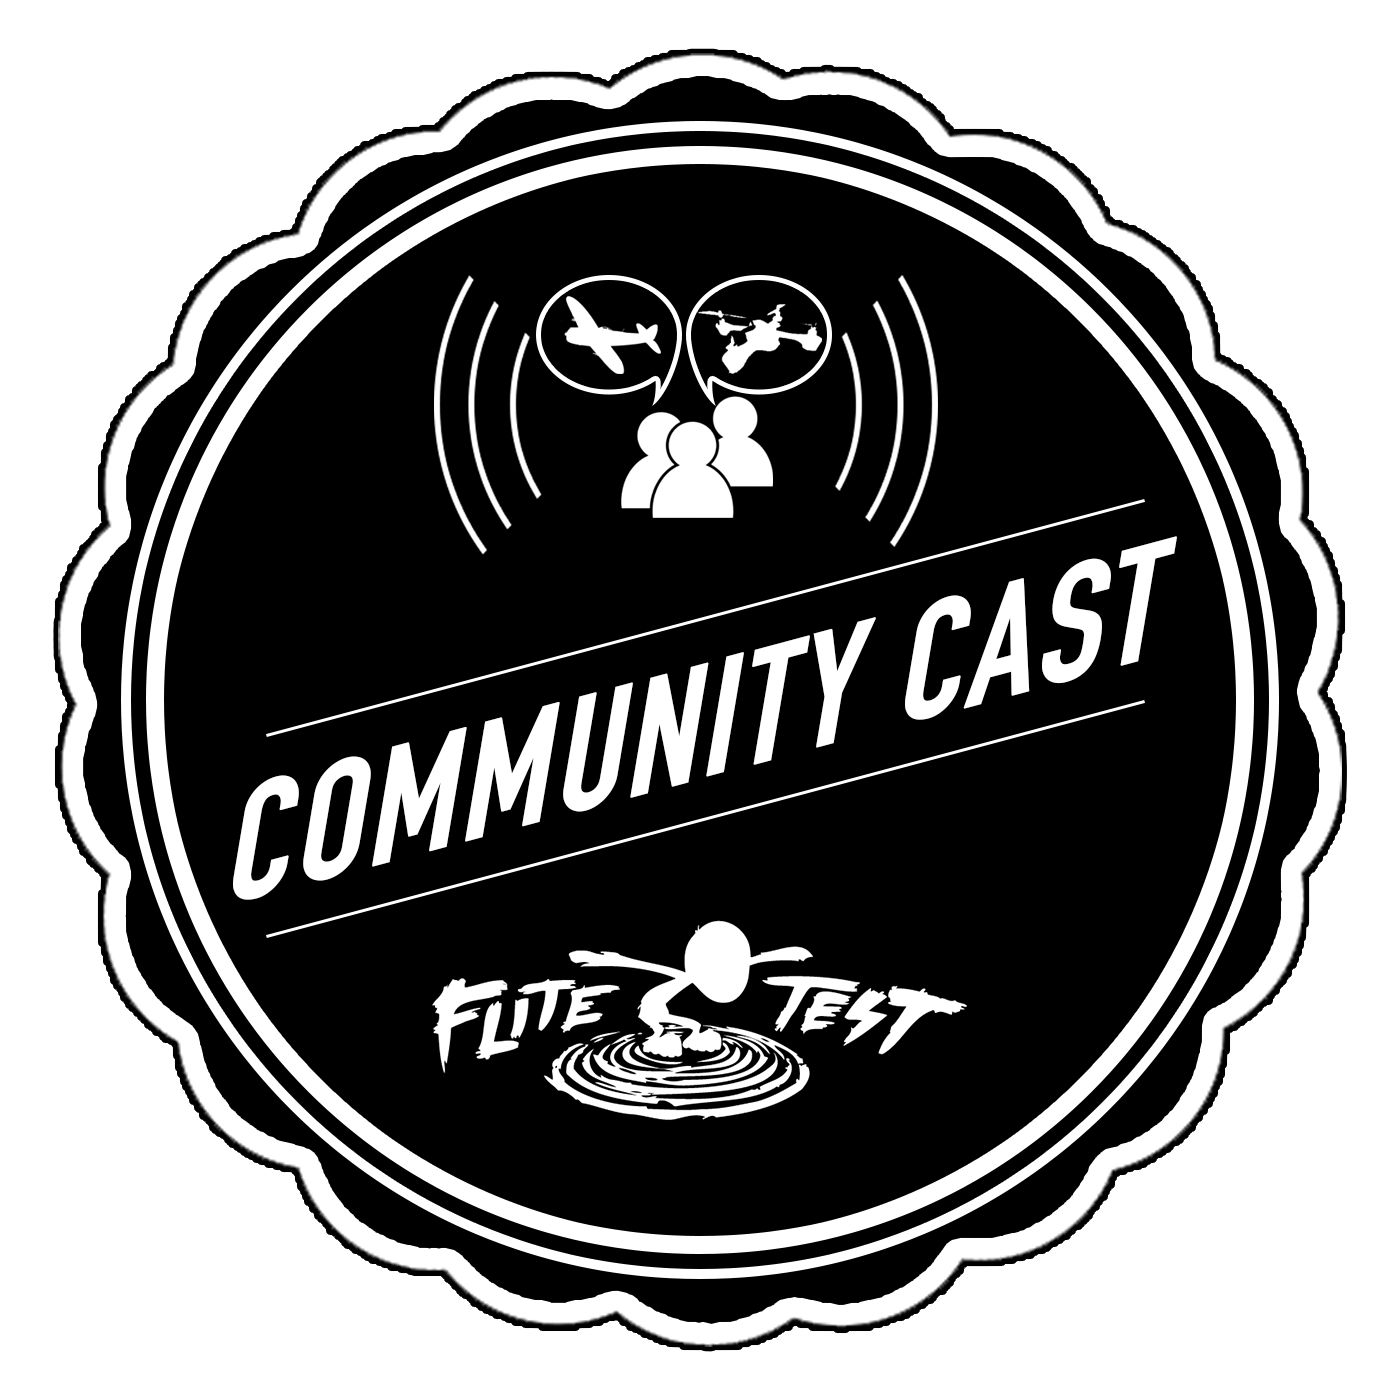 Flite Test Community Cast